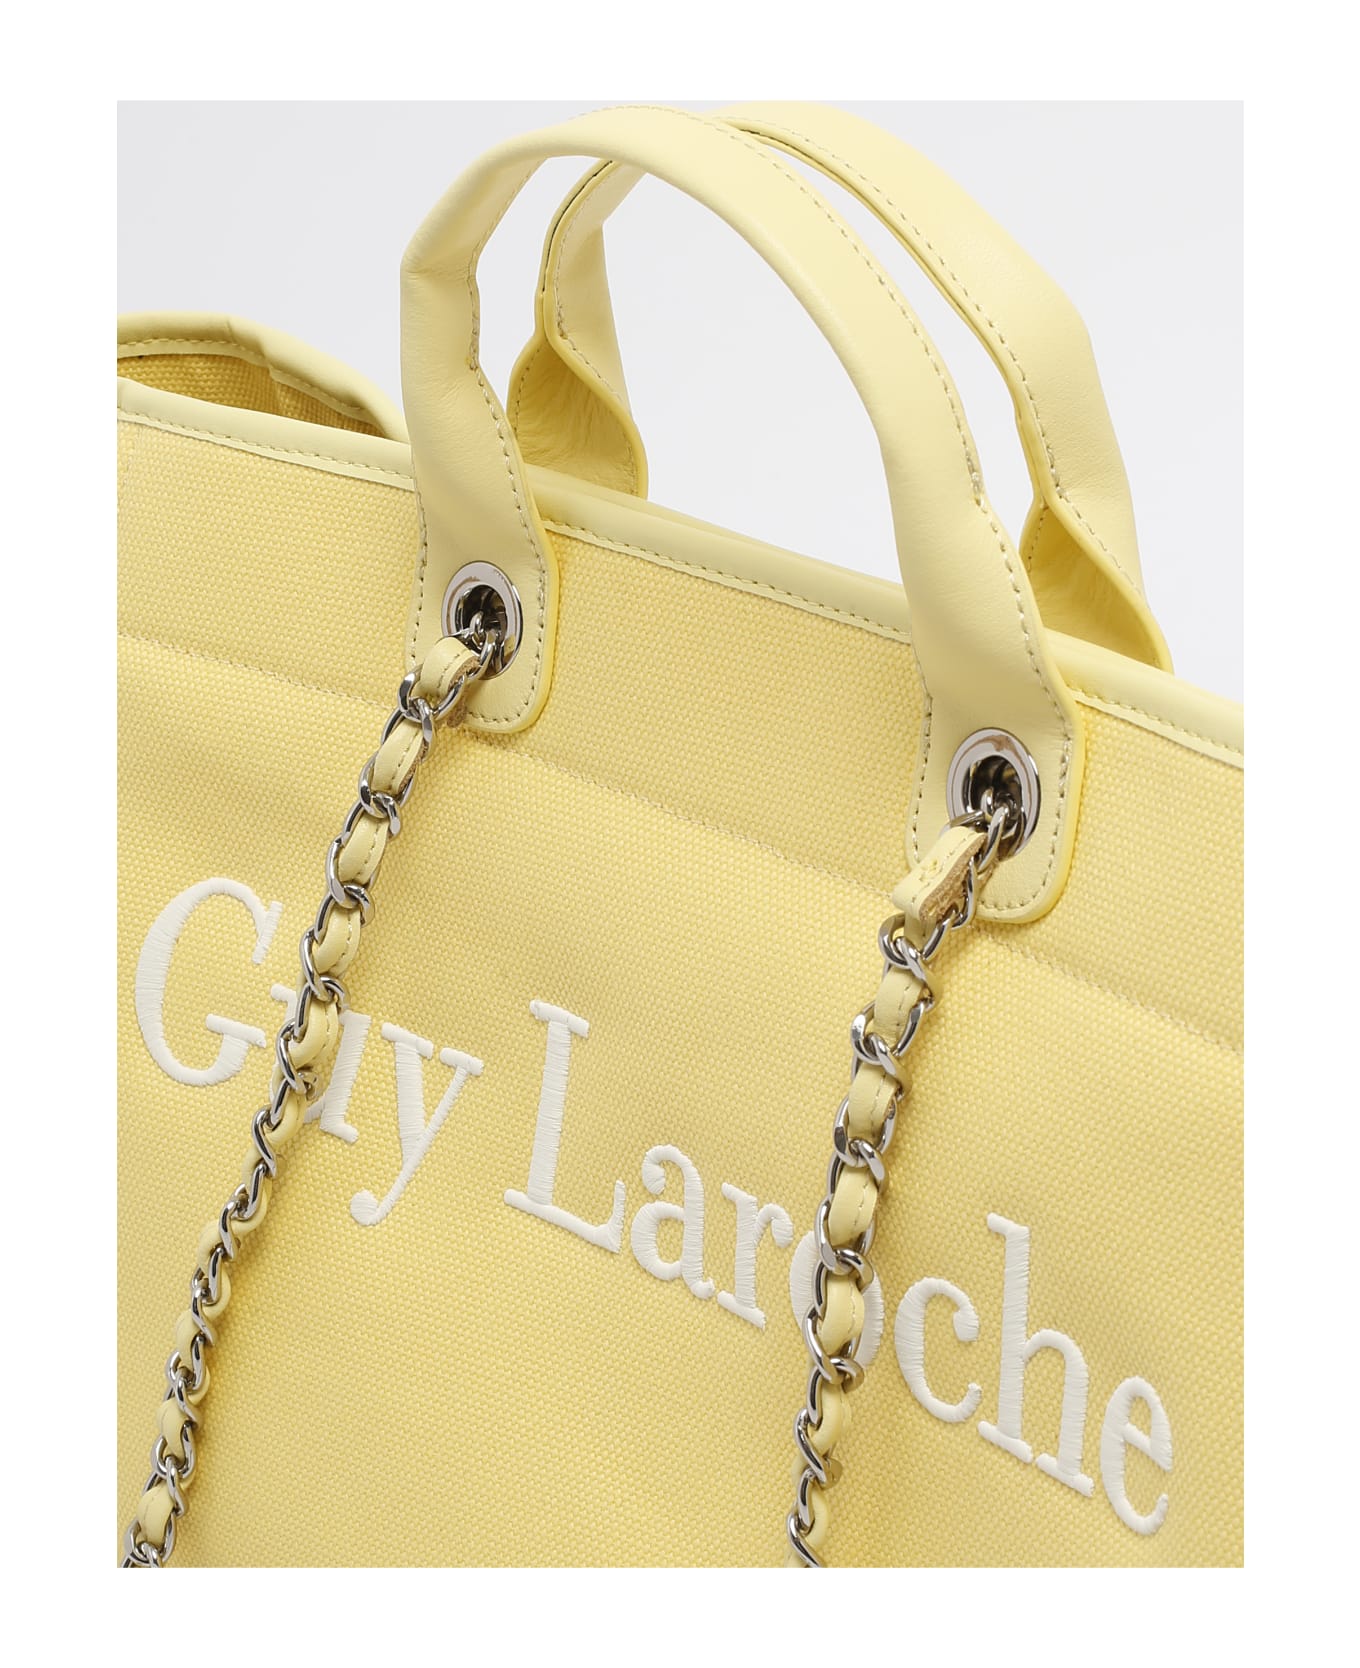 Guy Laroche Corinne Large Shopping Bag - GIALLO